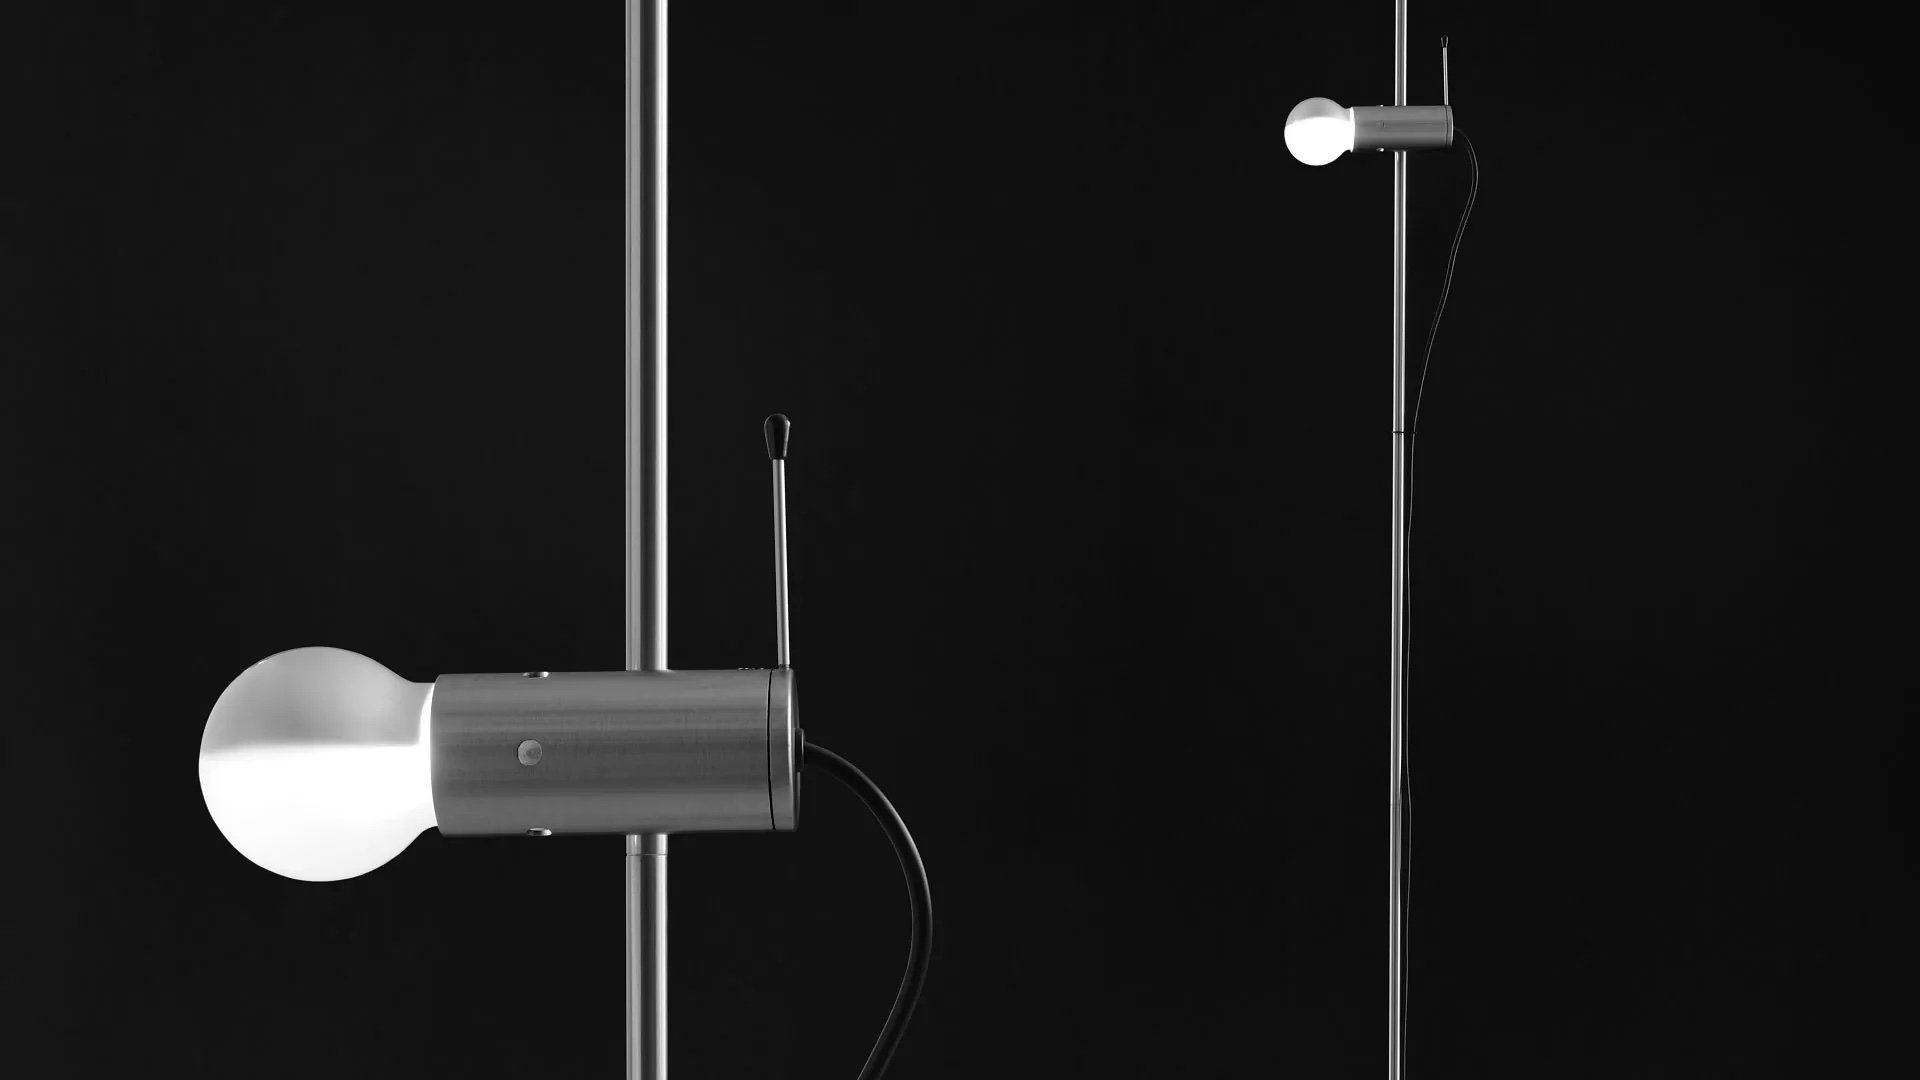 Agnoli Floor Lamp lighting from Oluce, designed by Tito Agnoli